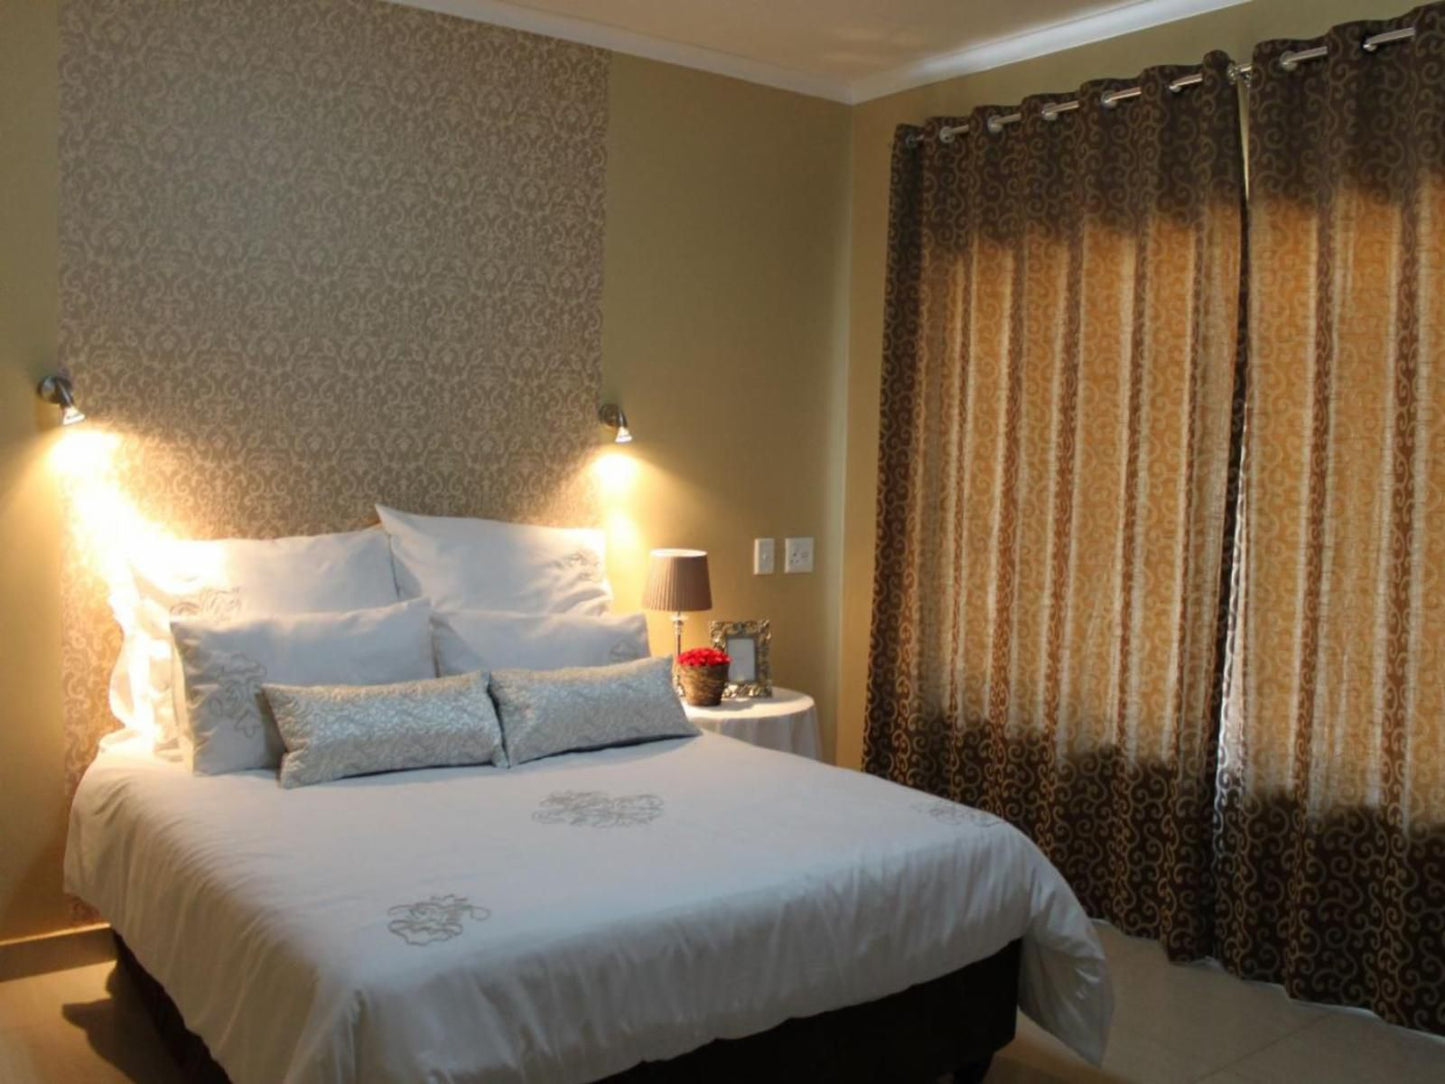 Goodwill Manor Boutique Guesthouse Reservoir Hills Durban Kwazulu Natal South Africa Bedroom